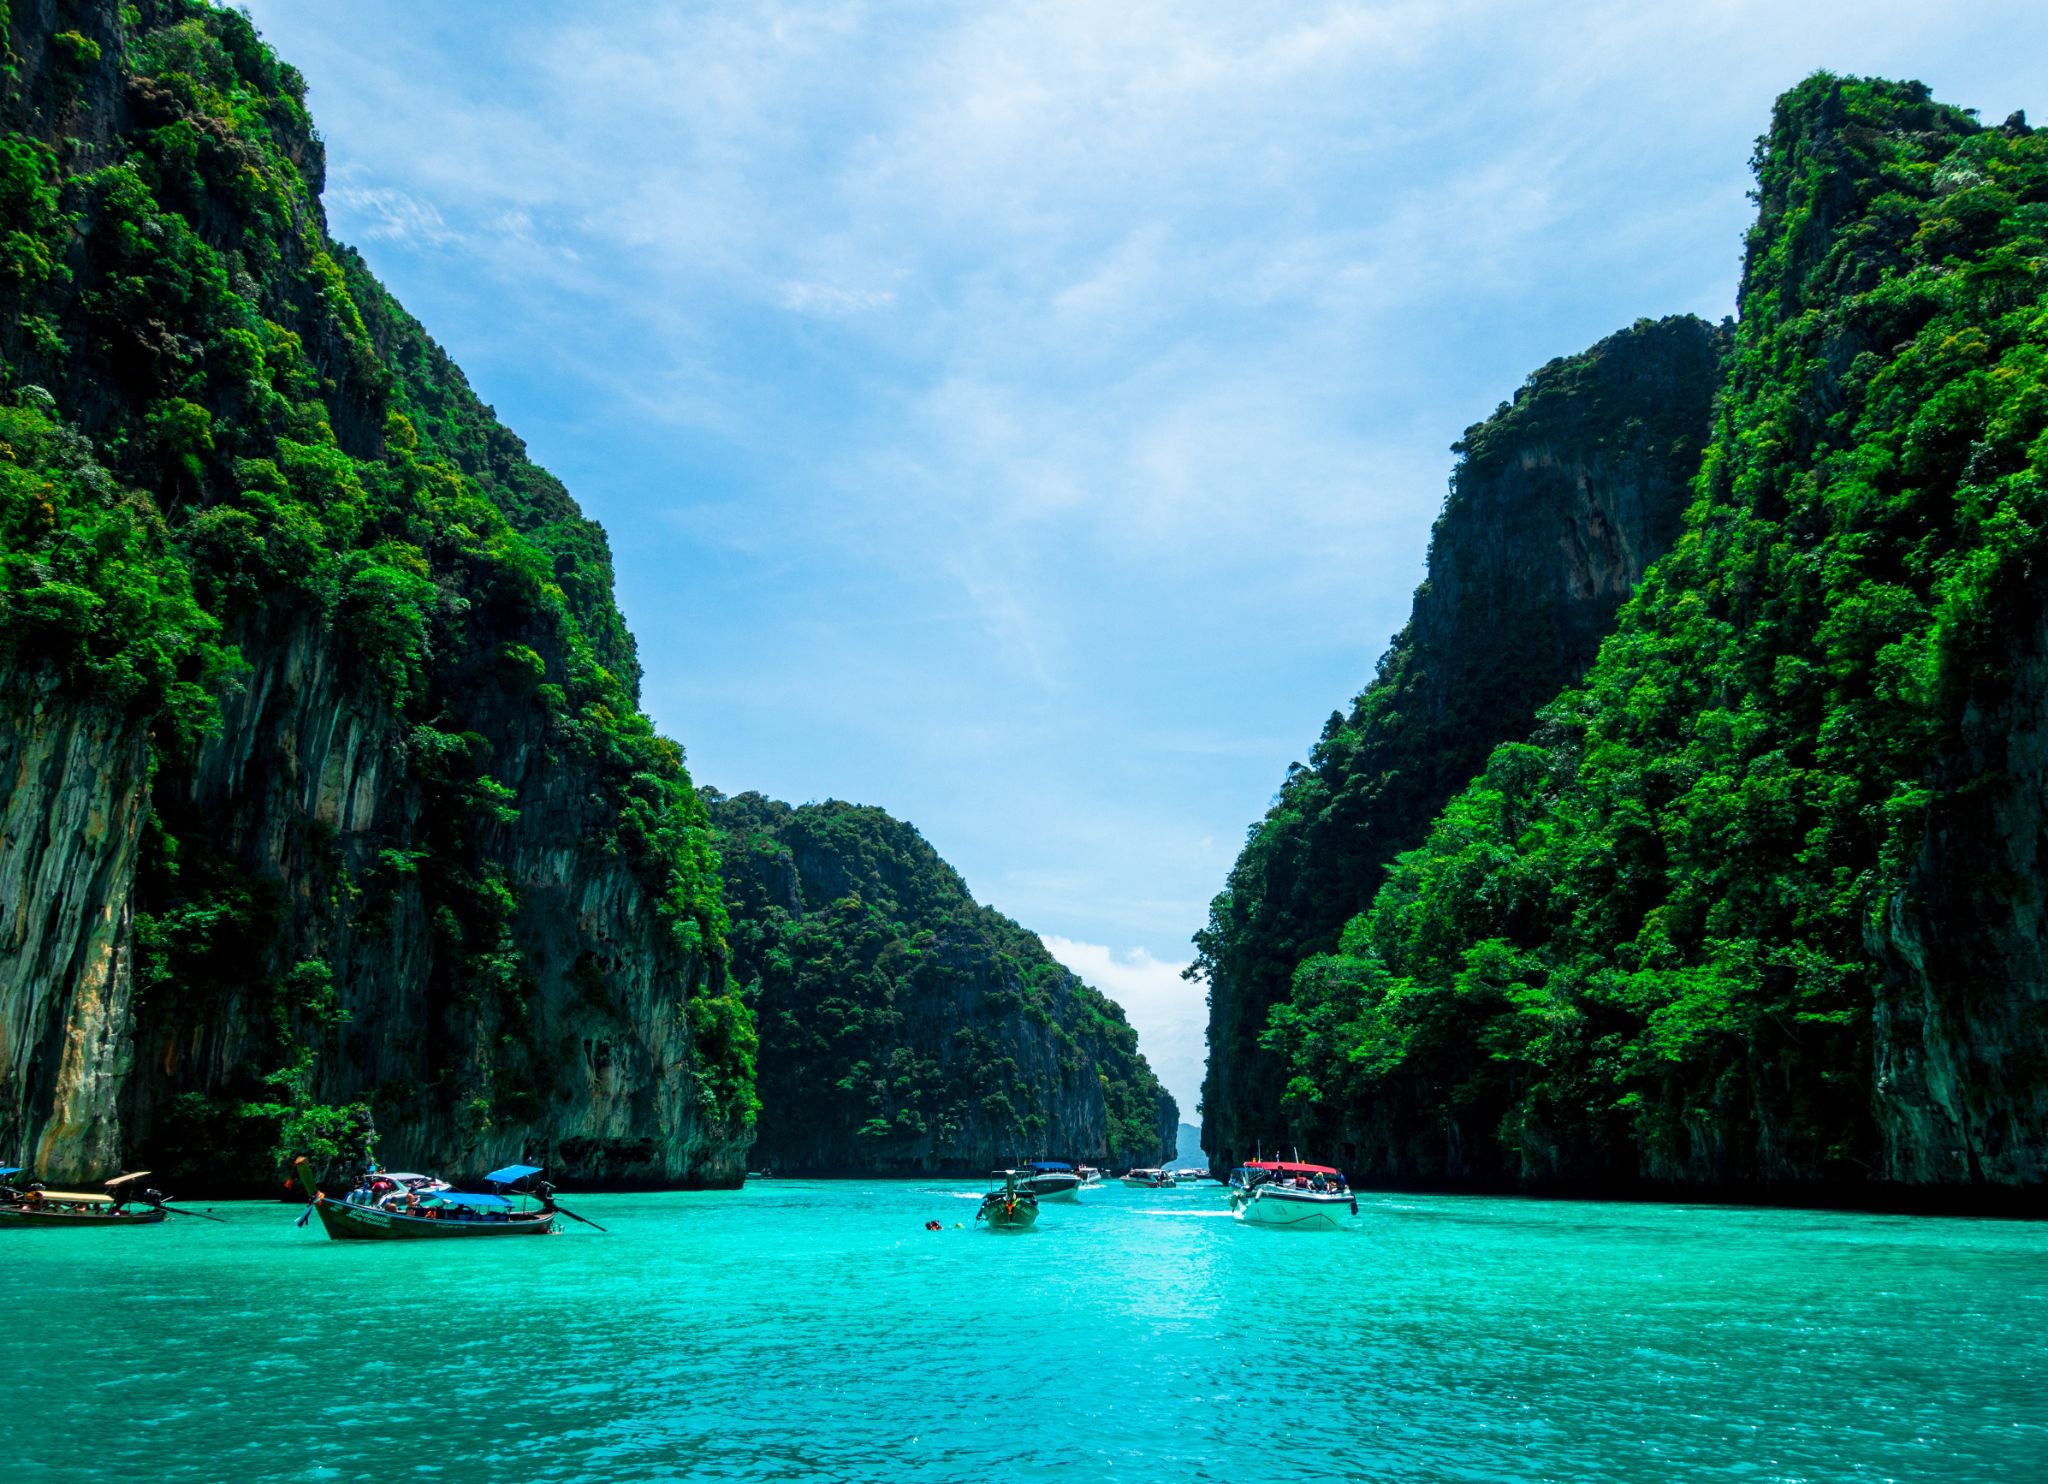 How Phuket Thailand Became a Travel and Retirement Destination